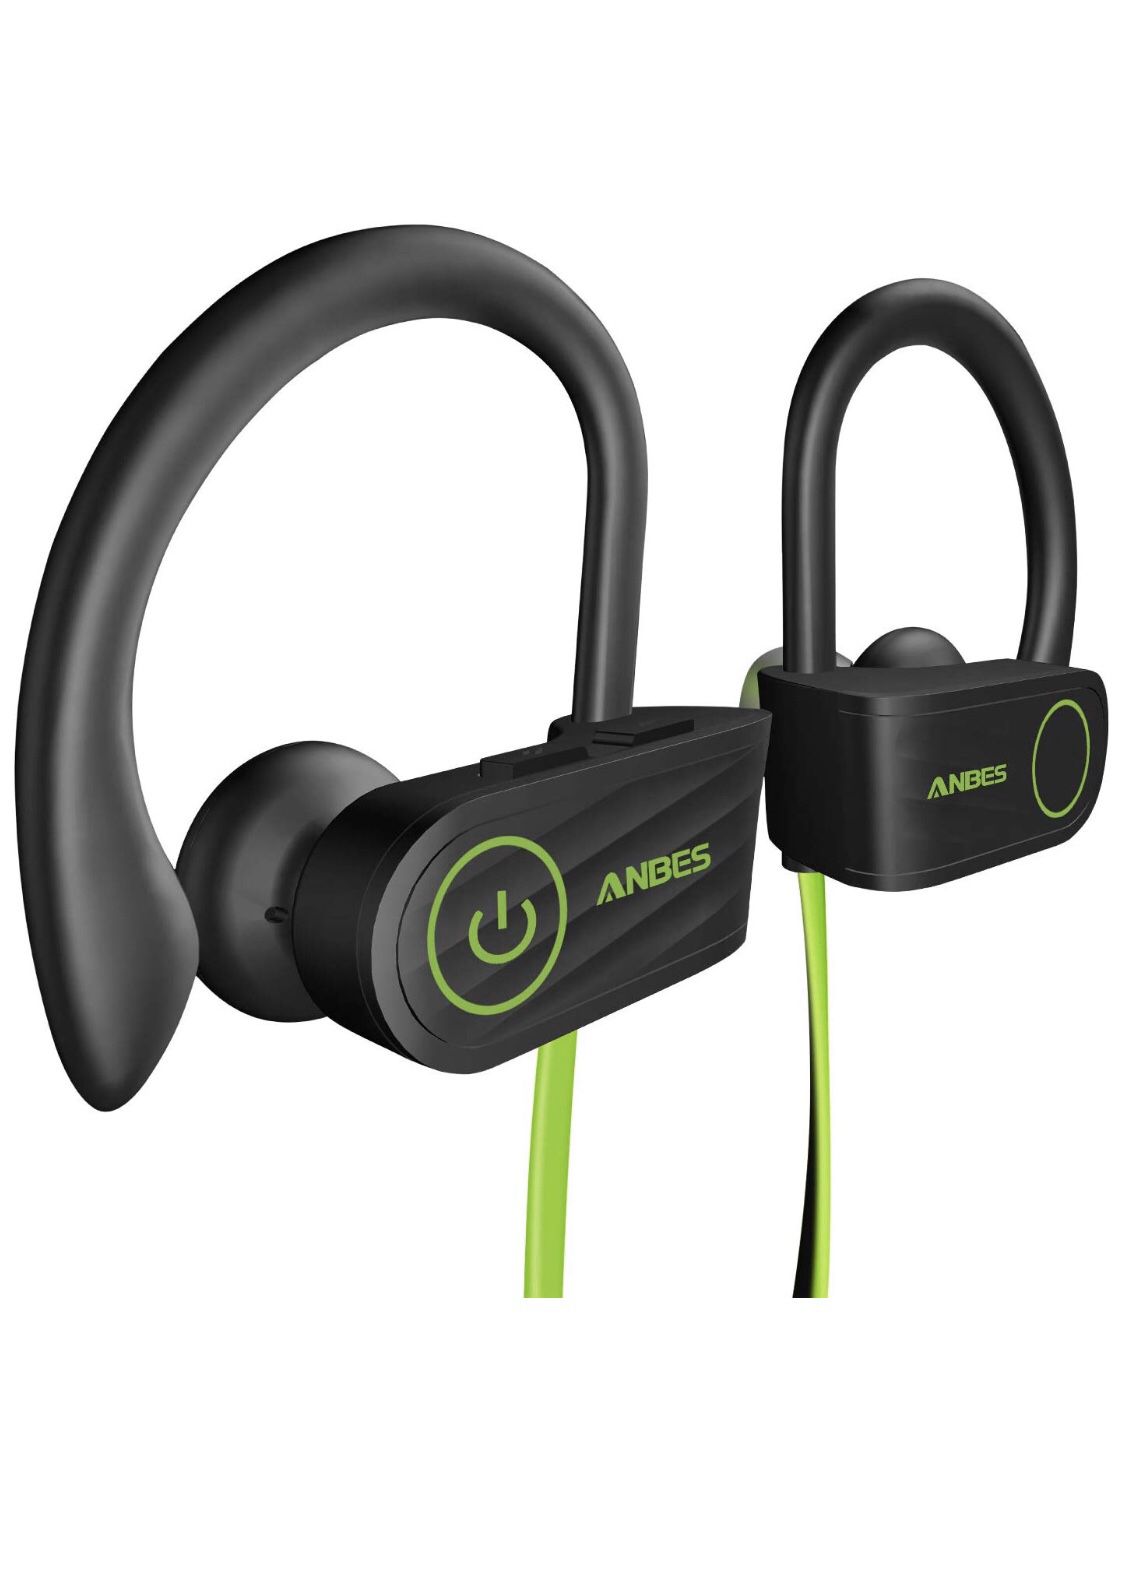 Brand new Bluetooth Headphones, Wireless Earbuds, IPX7 Waterproof Sports Earphones with Ear Hooks & Mic, HD Stereo in-Ear Headphones Gym Running Work